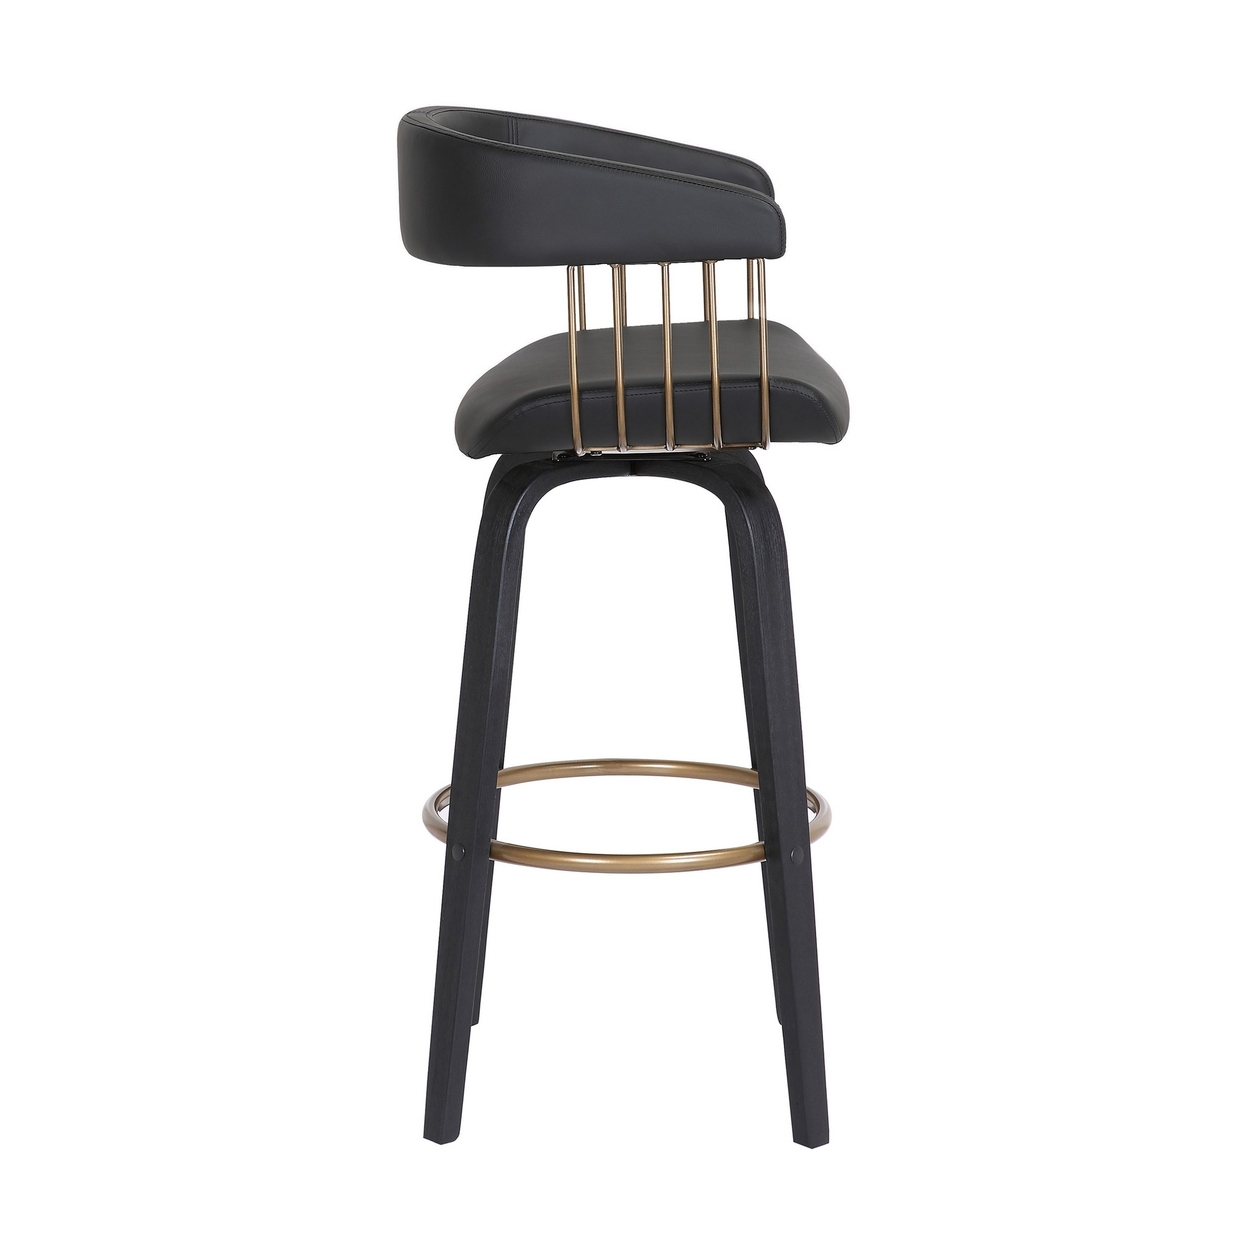 Maya 31 Inch Swivel Barstool Chair, Black Faux Leather, Bronze Metal Slats - Saltoro Sherpi